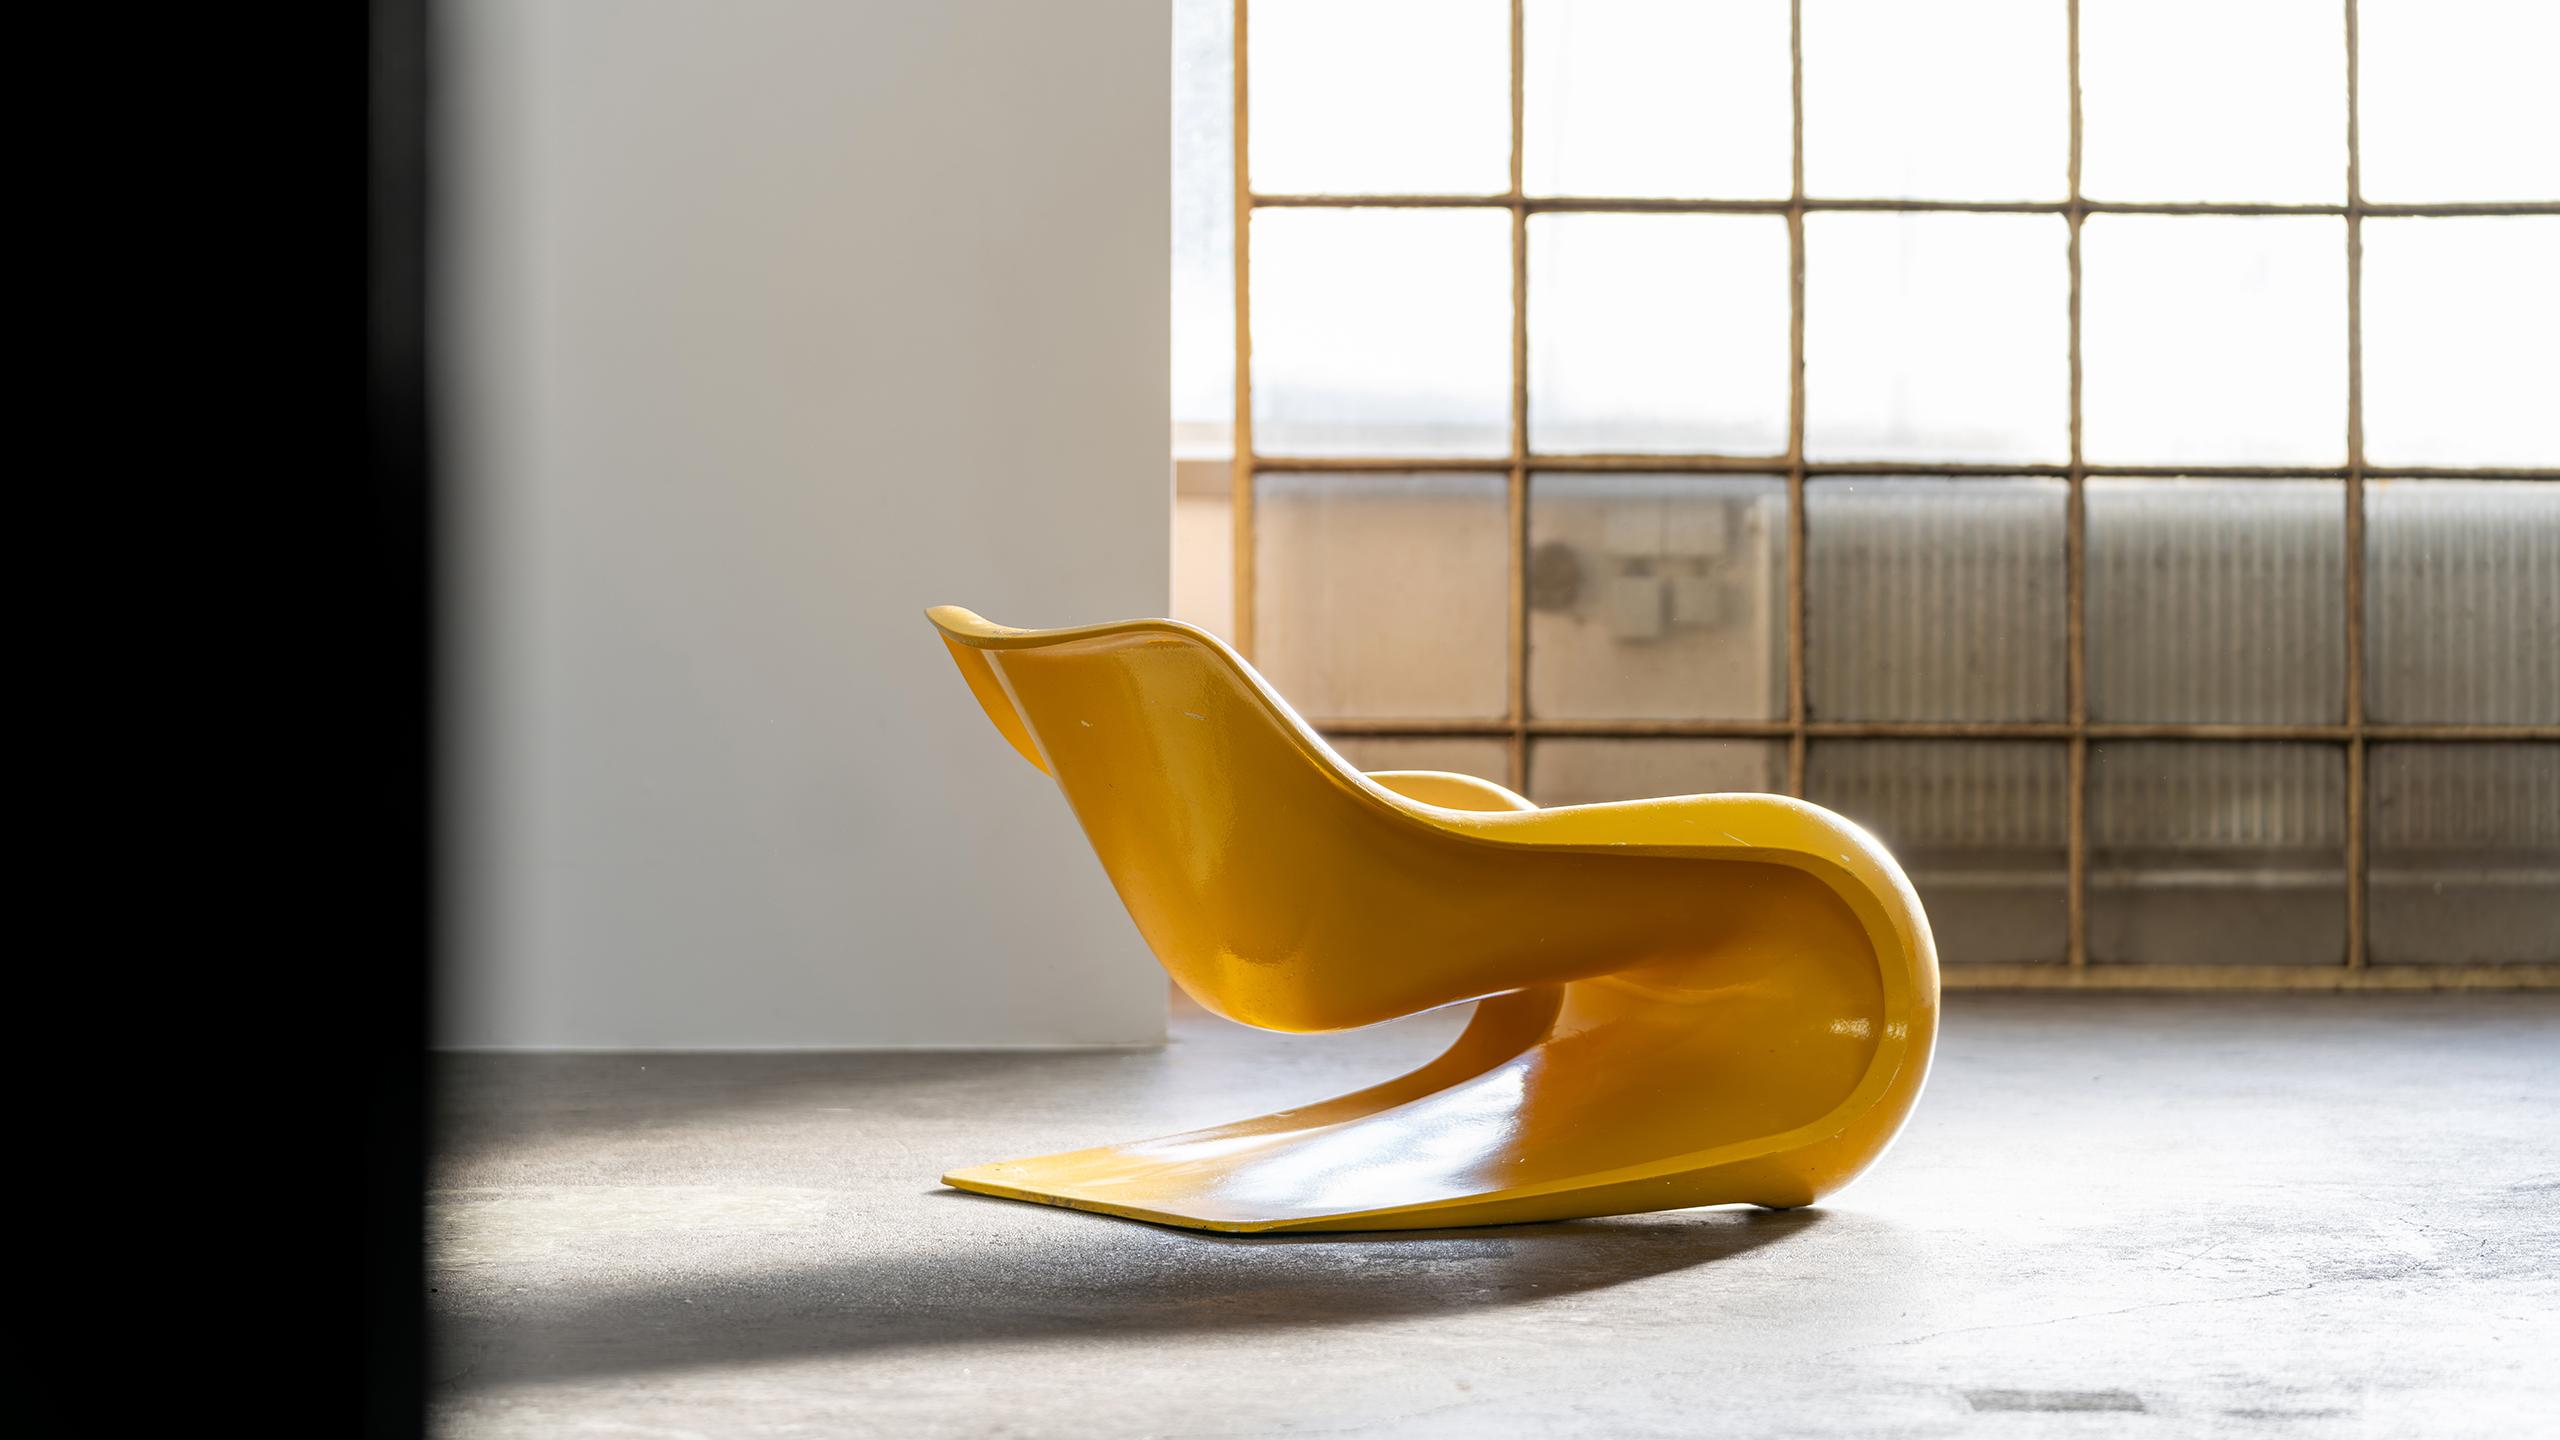 Fiberglass Targa Chair by Klaus Uredat, 19709 for Horn Collection, Germany - Organic Design